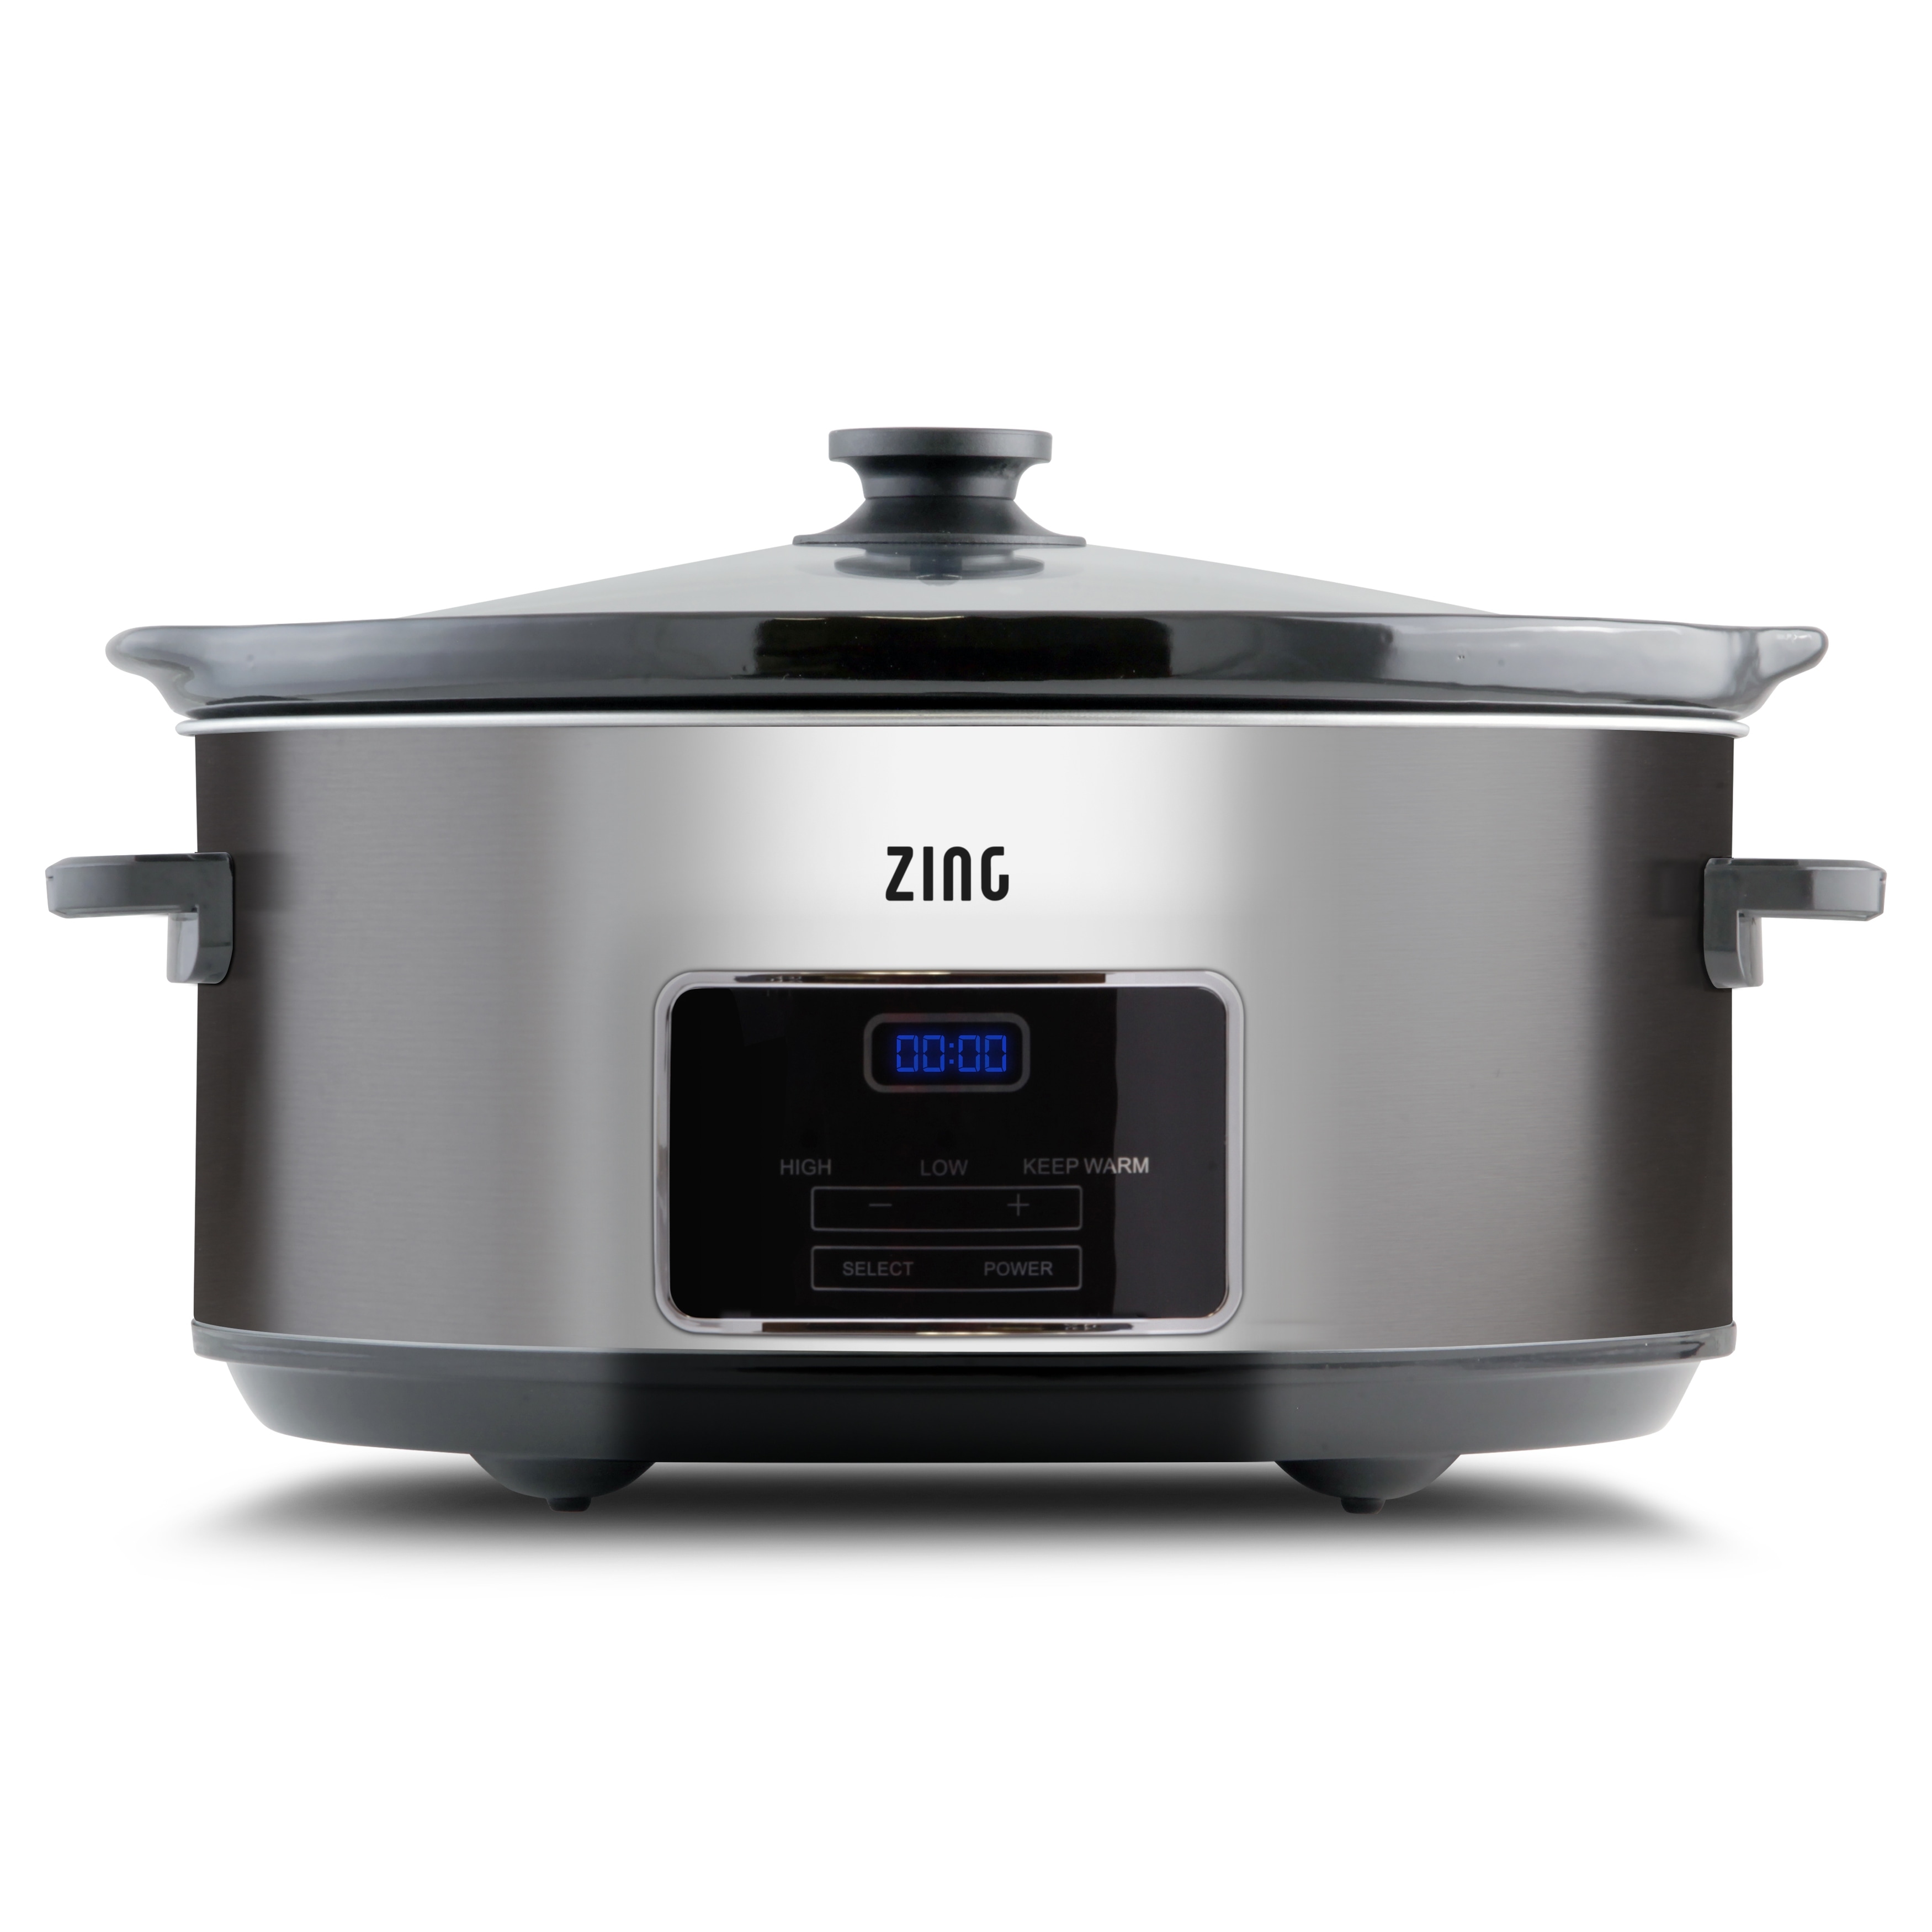 Zing 7 Qt Oval Dark Stainless Steel Digital Slow Cooker - Bed Bath & Beyond  - 32651136